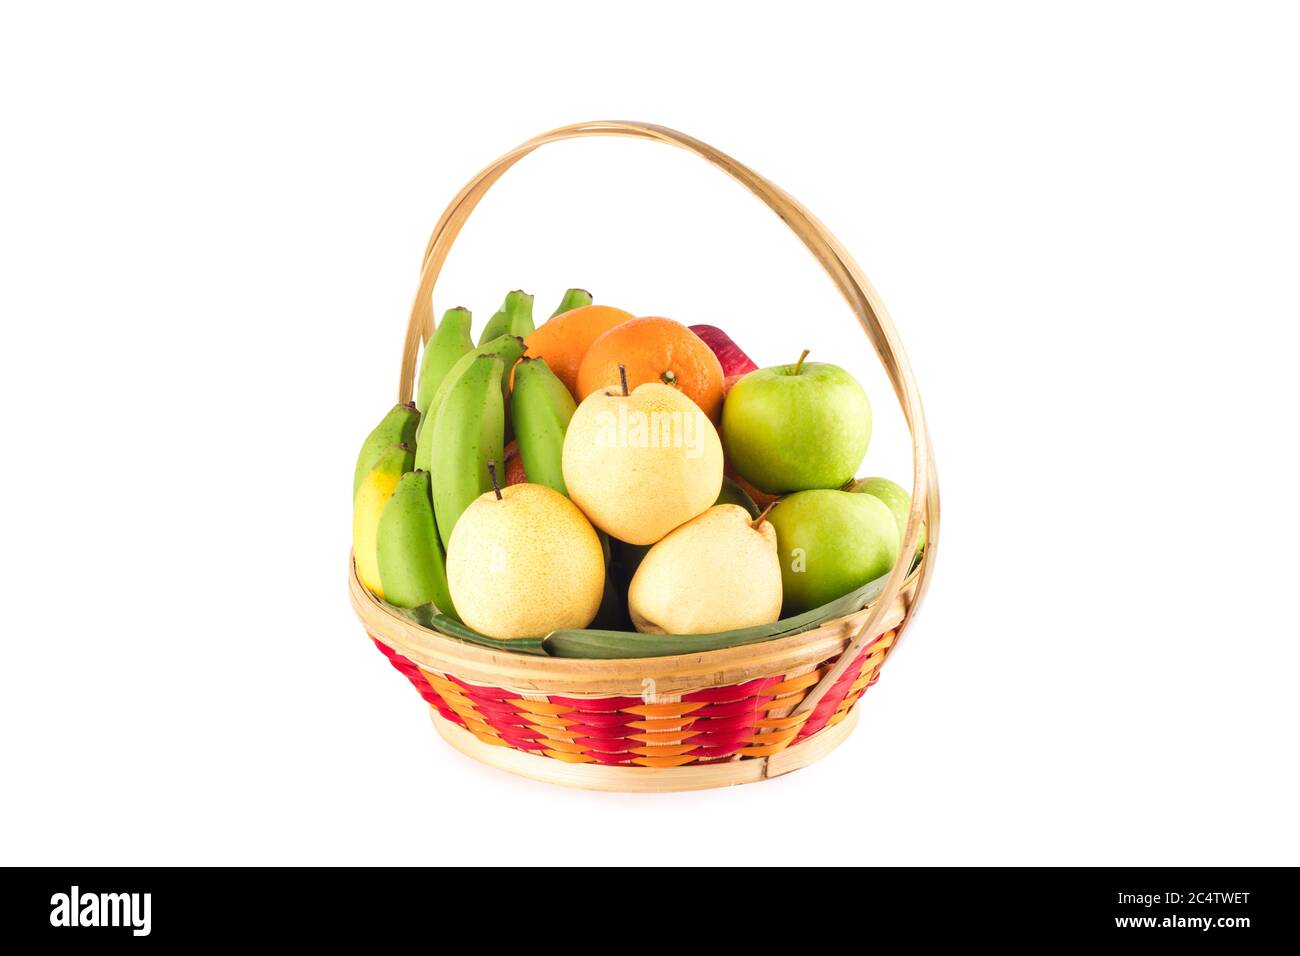 Composizione frutta fresca assortita come arancia, pera cinese, banana, mela rossa e applein verde cesto di bambu vimini su frutta bianca di fondo He Foto Stock